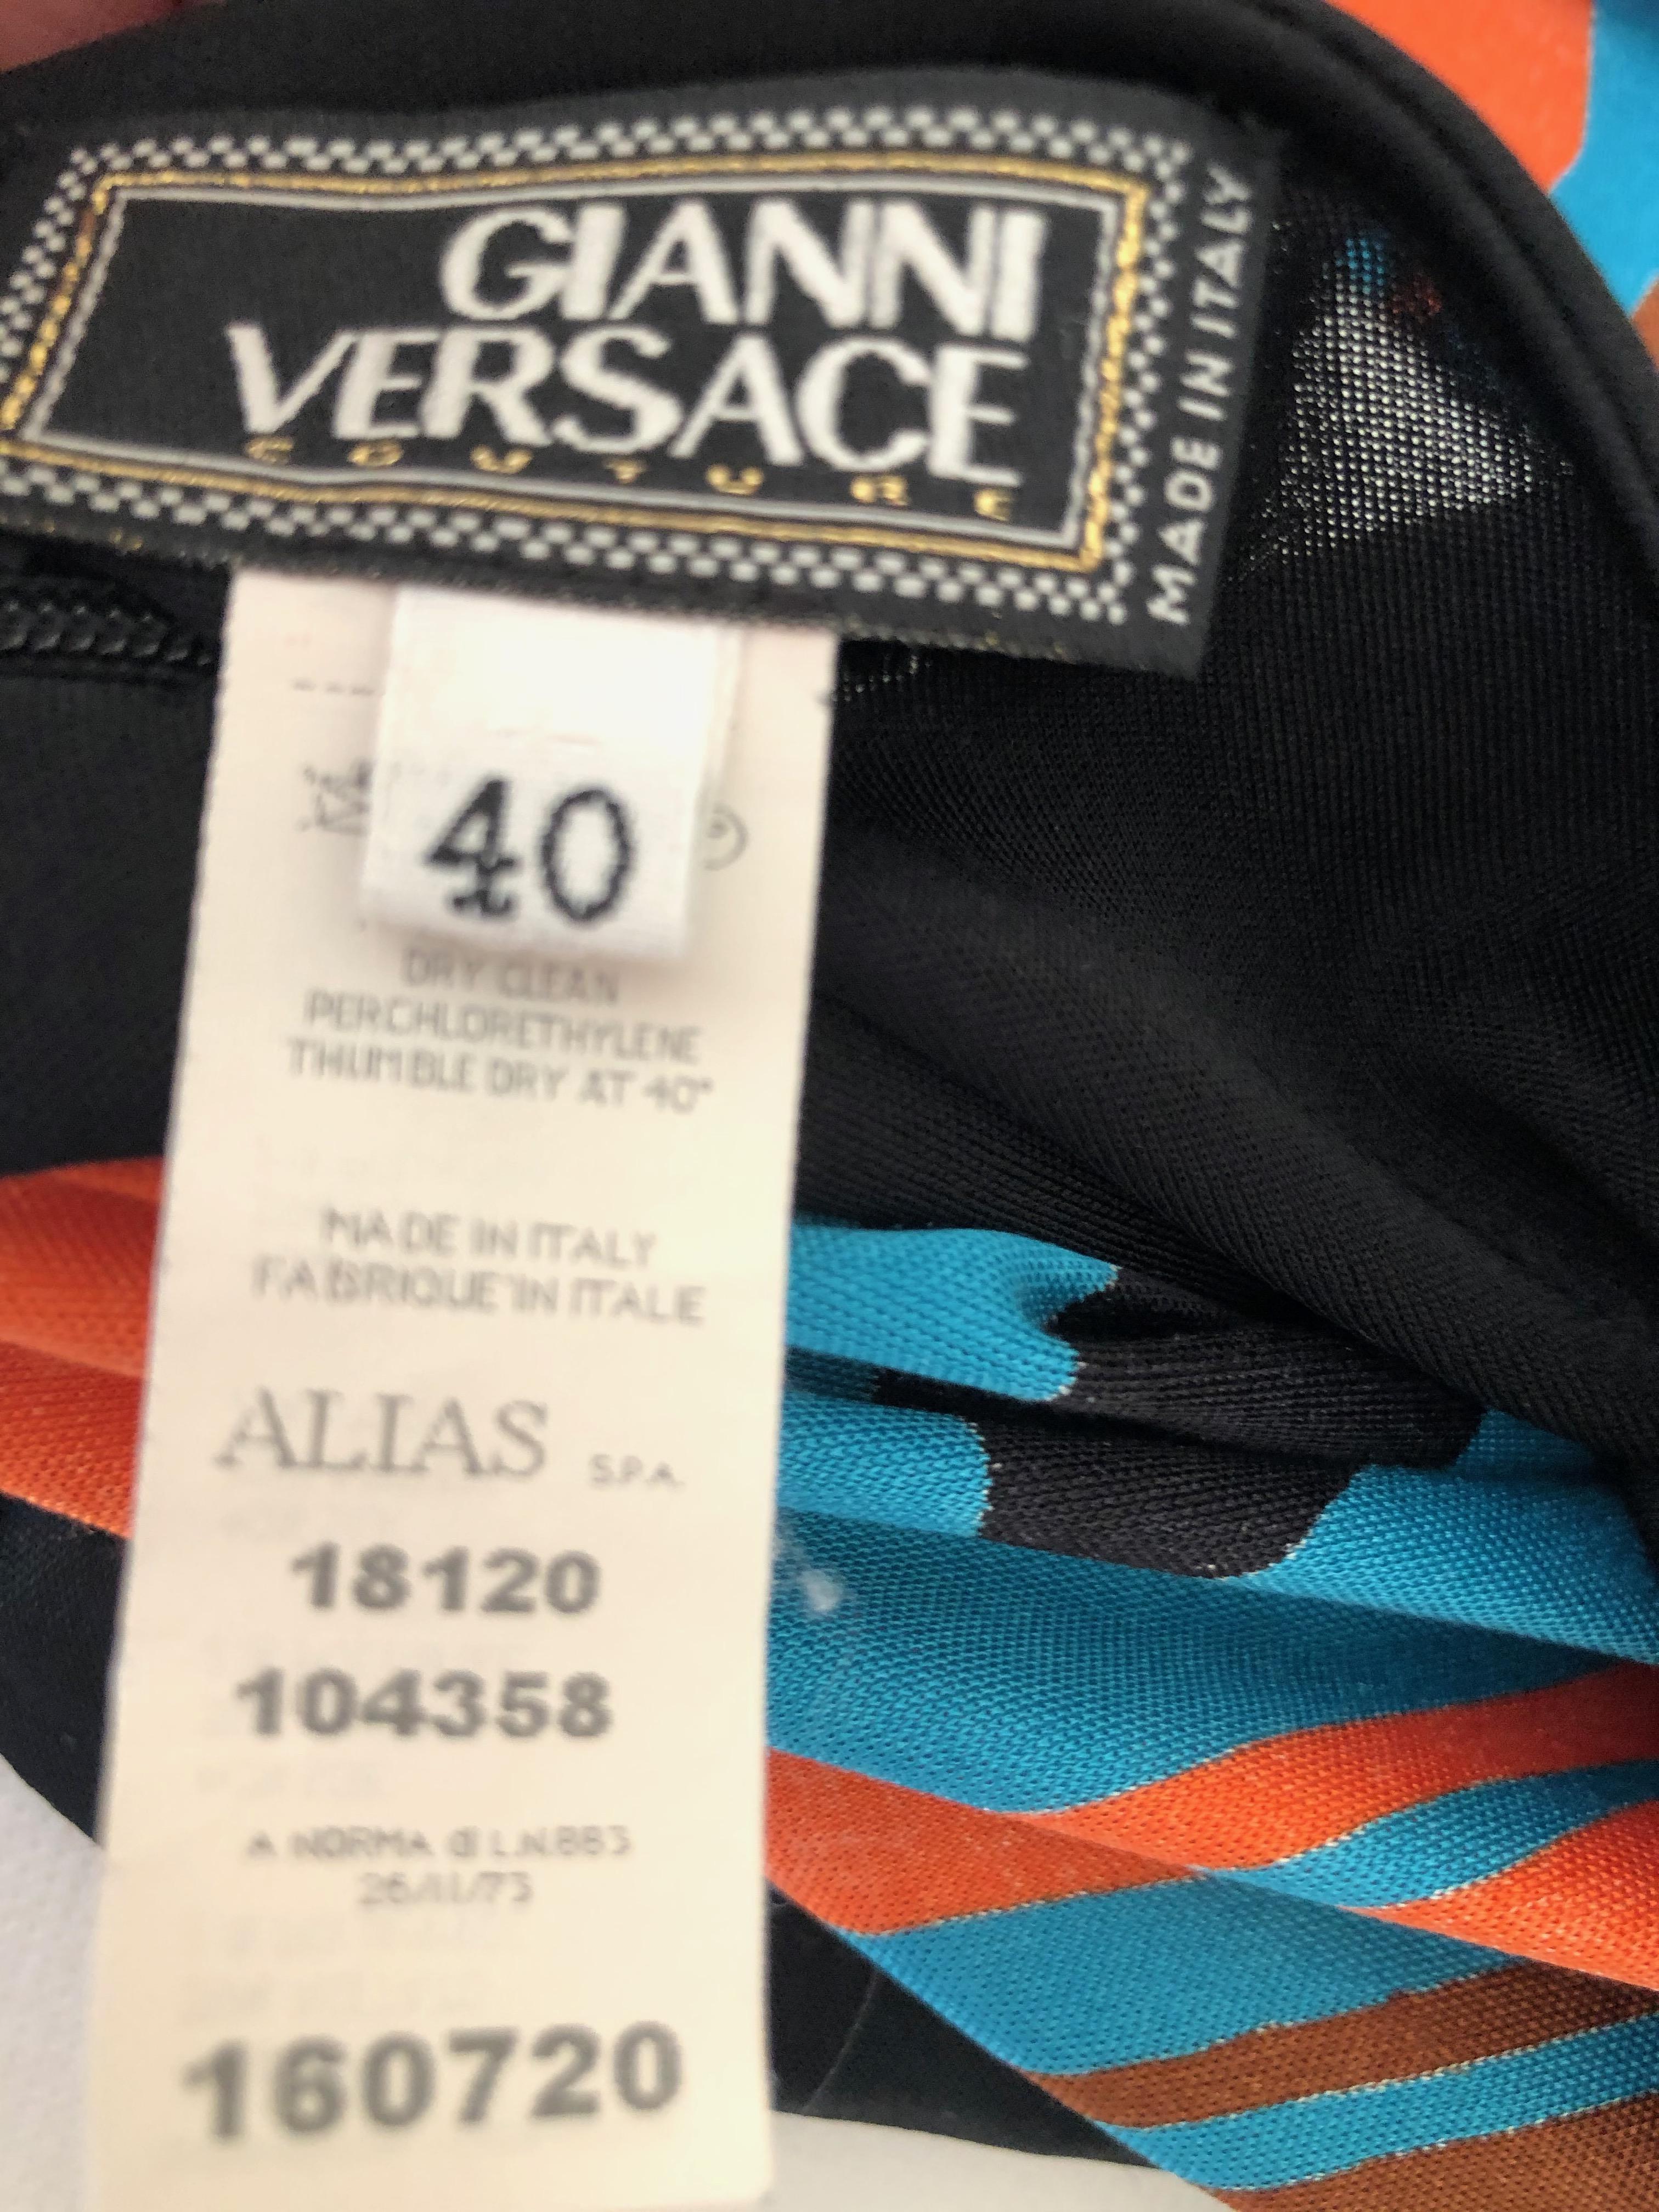 Gianni Versace Couture Vintage 80's Silk Greek Key Pattern Skirt
Size 40
Waist 28